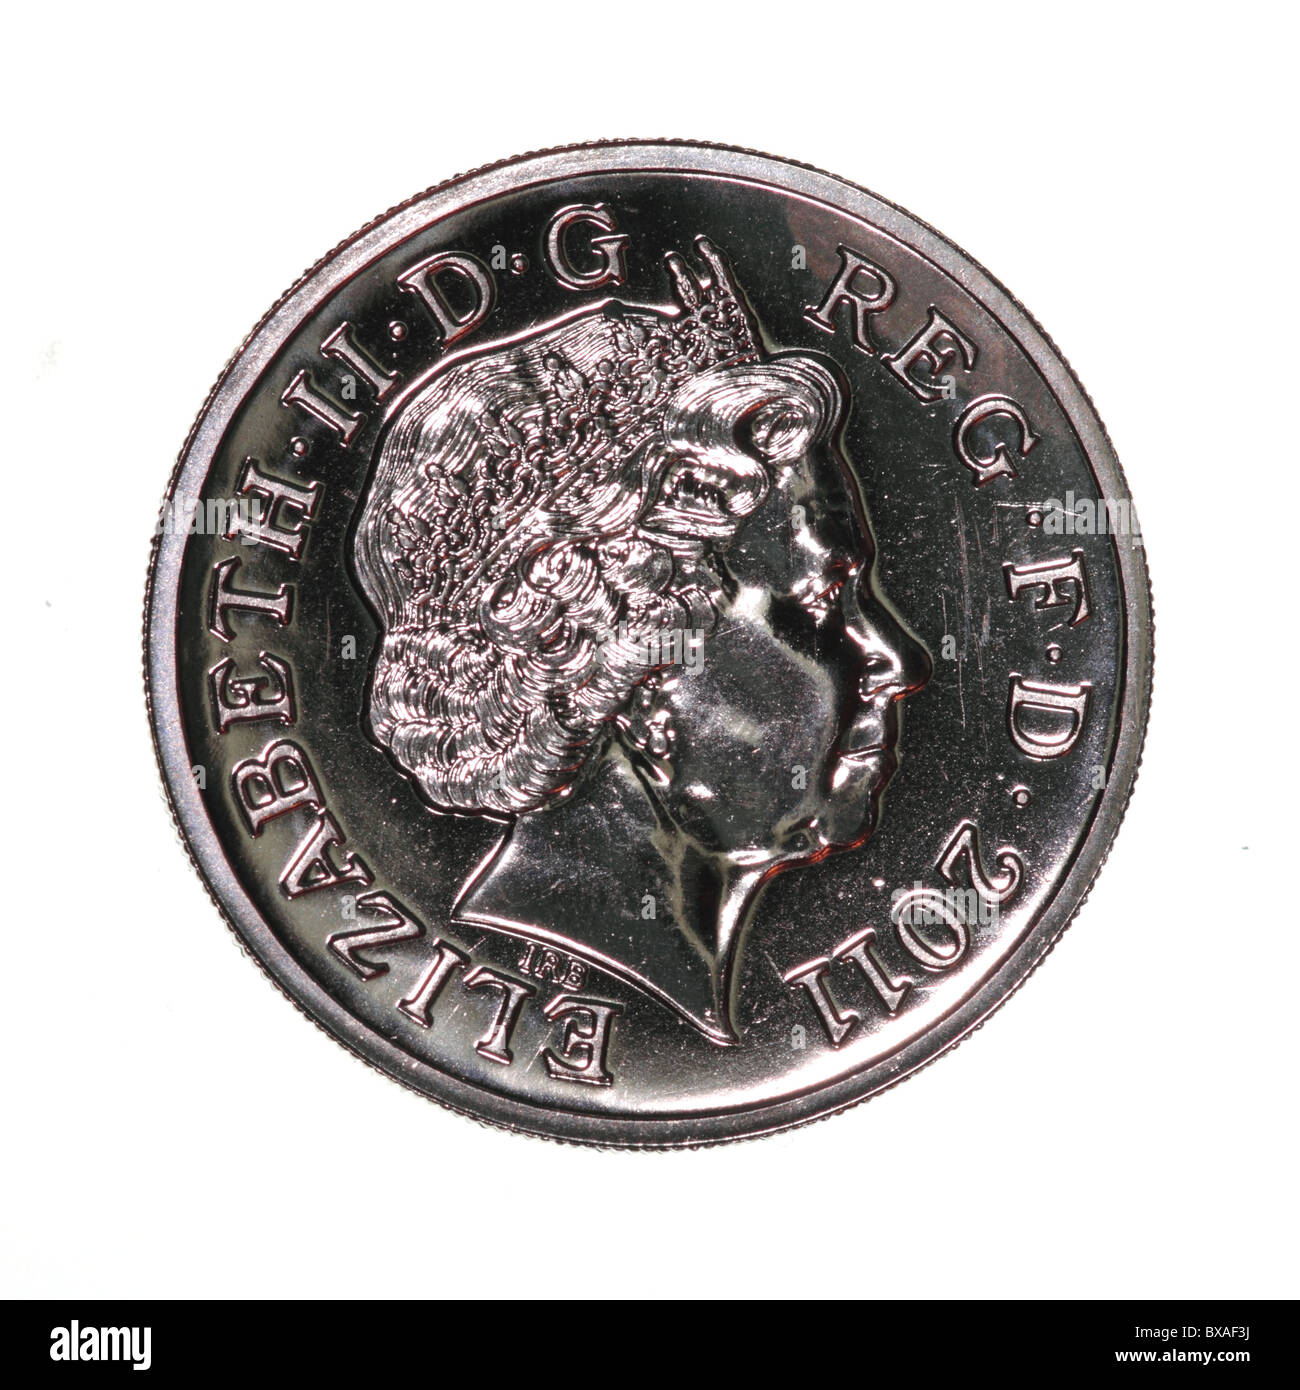 2011 Sterling monedas Foto de stock